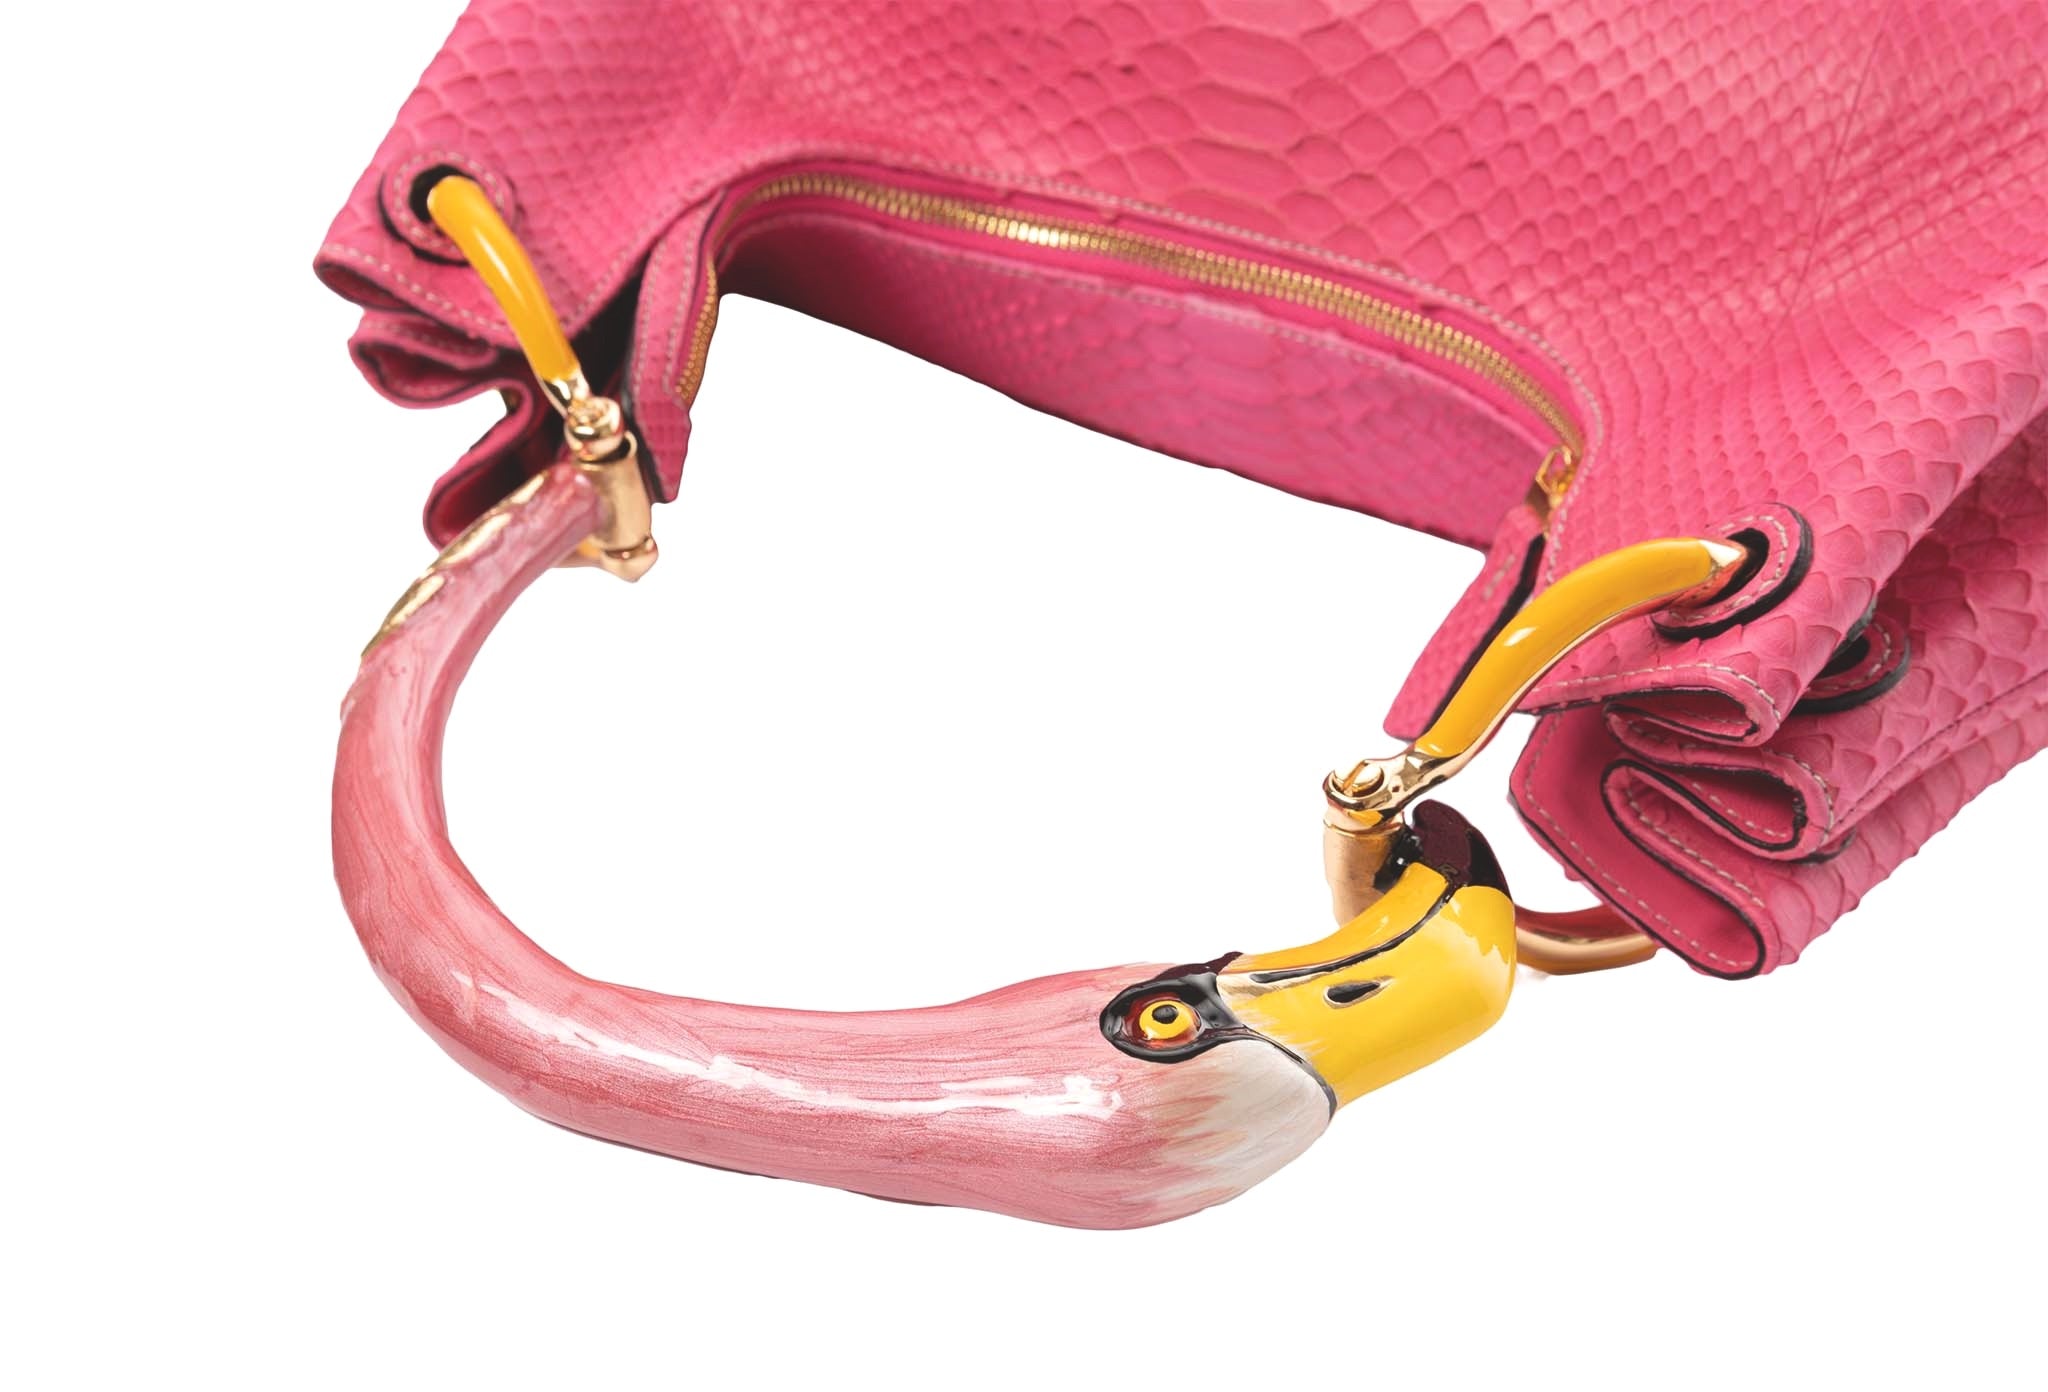 fuschia-pink-leather-designer-tote-bag-back - Schandra